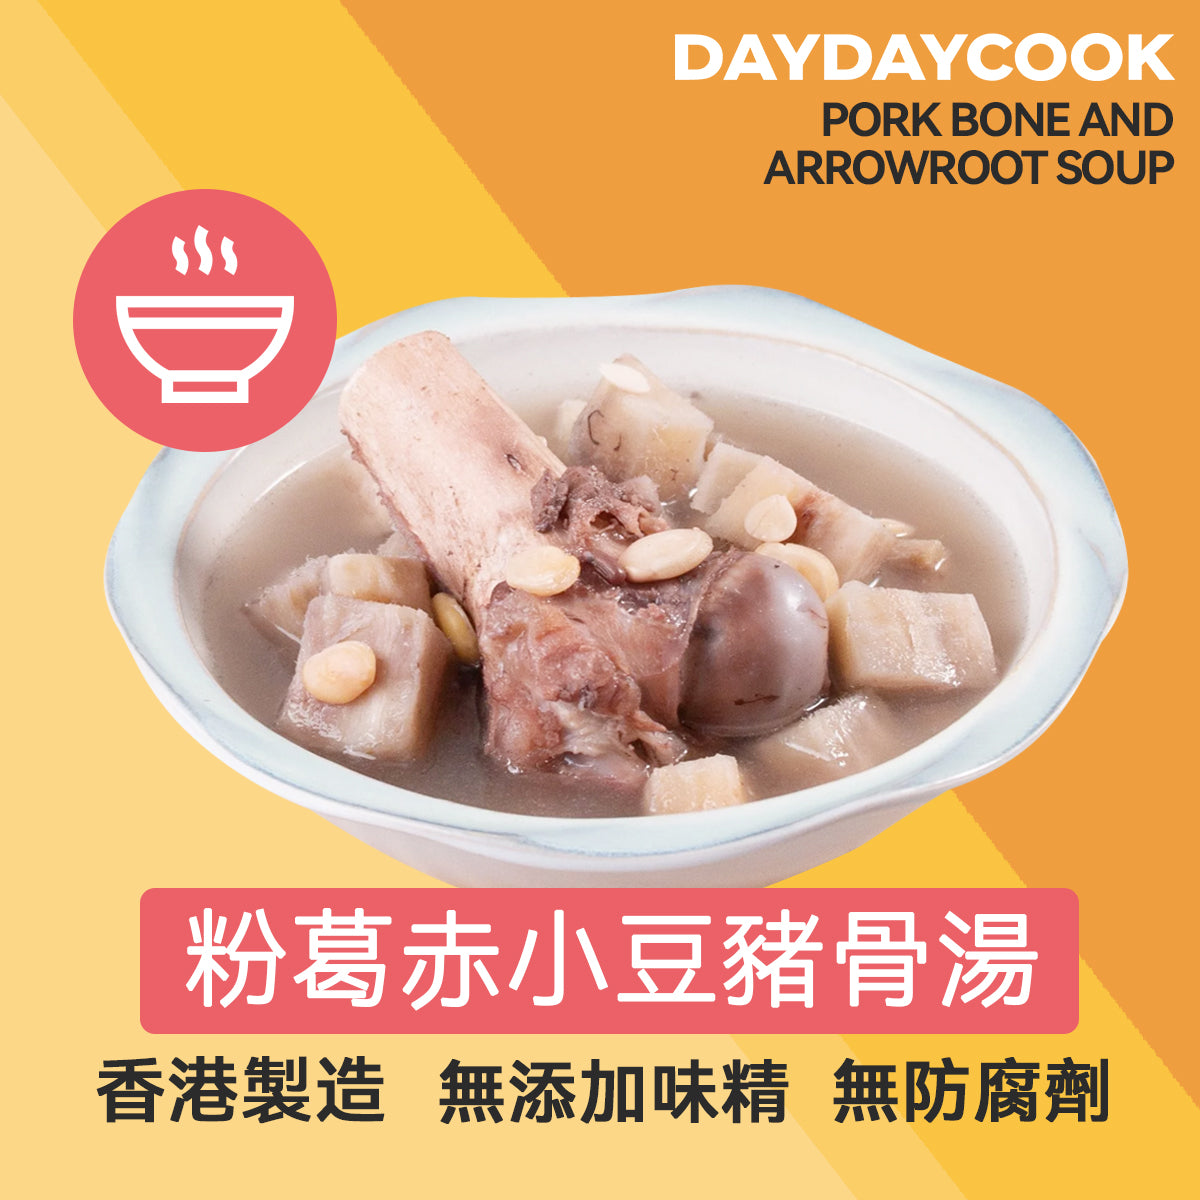  Pork Bone and Arrowroot Soup